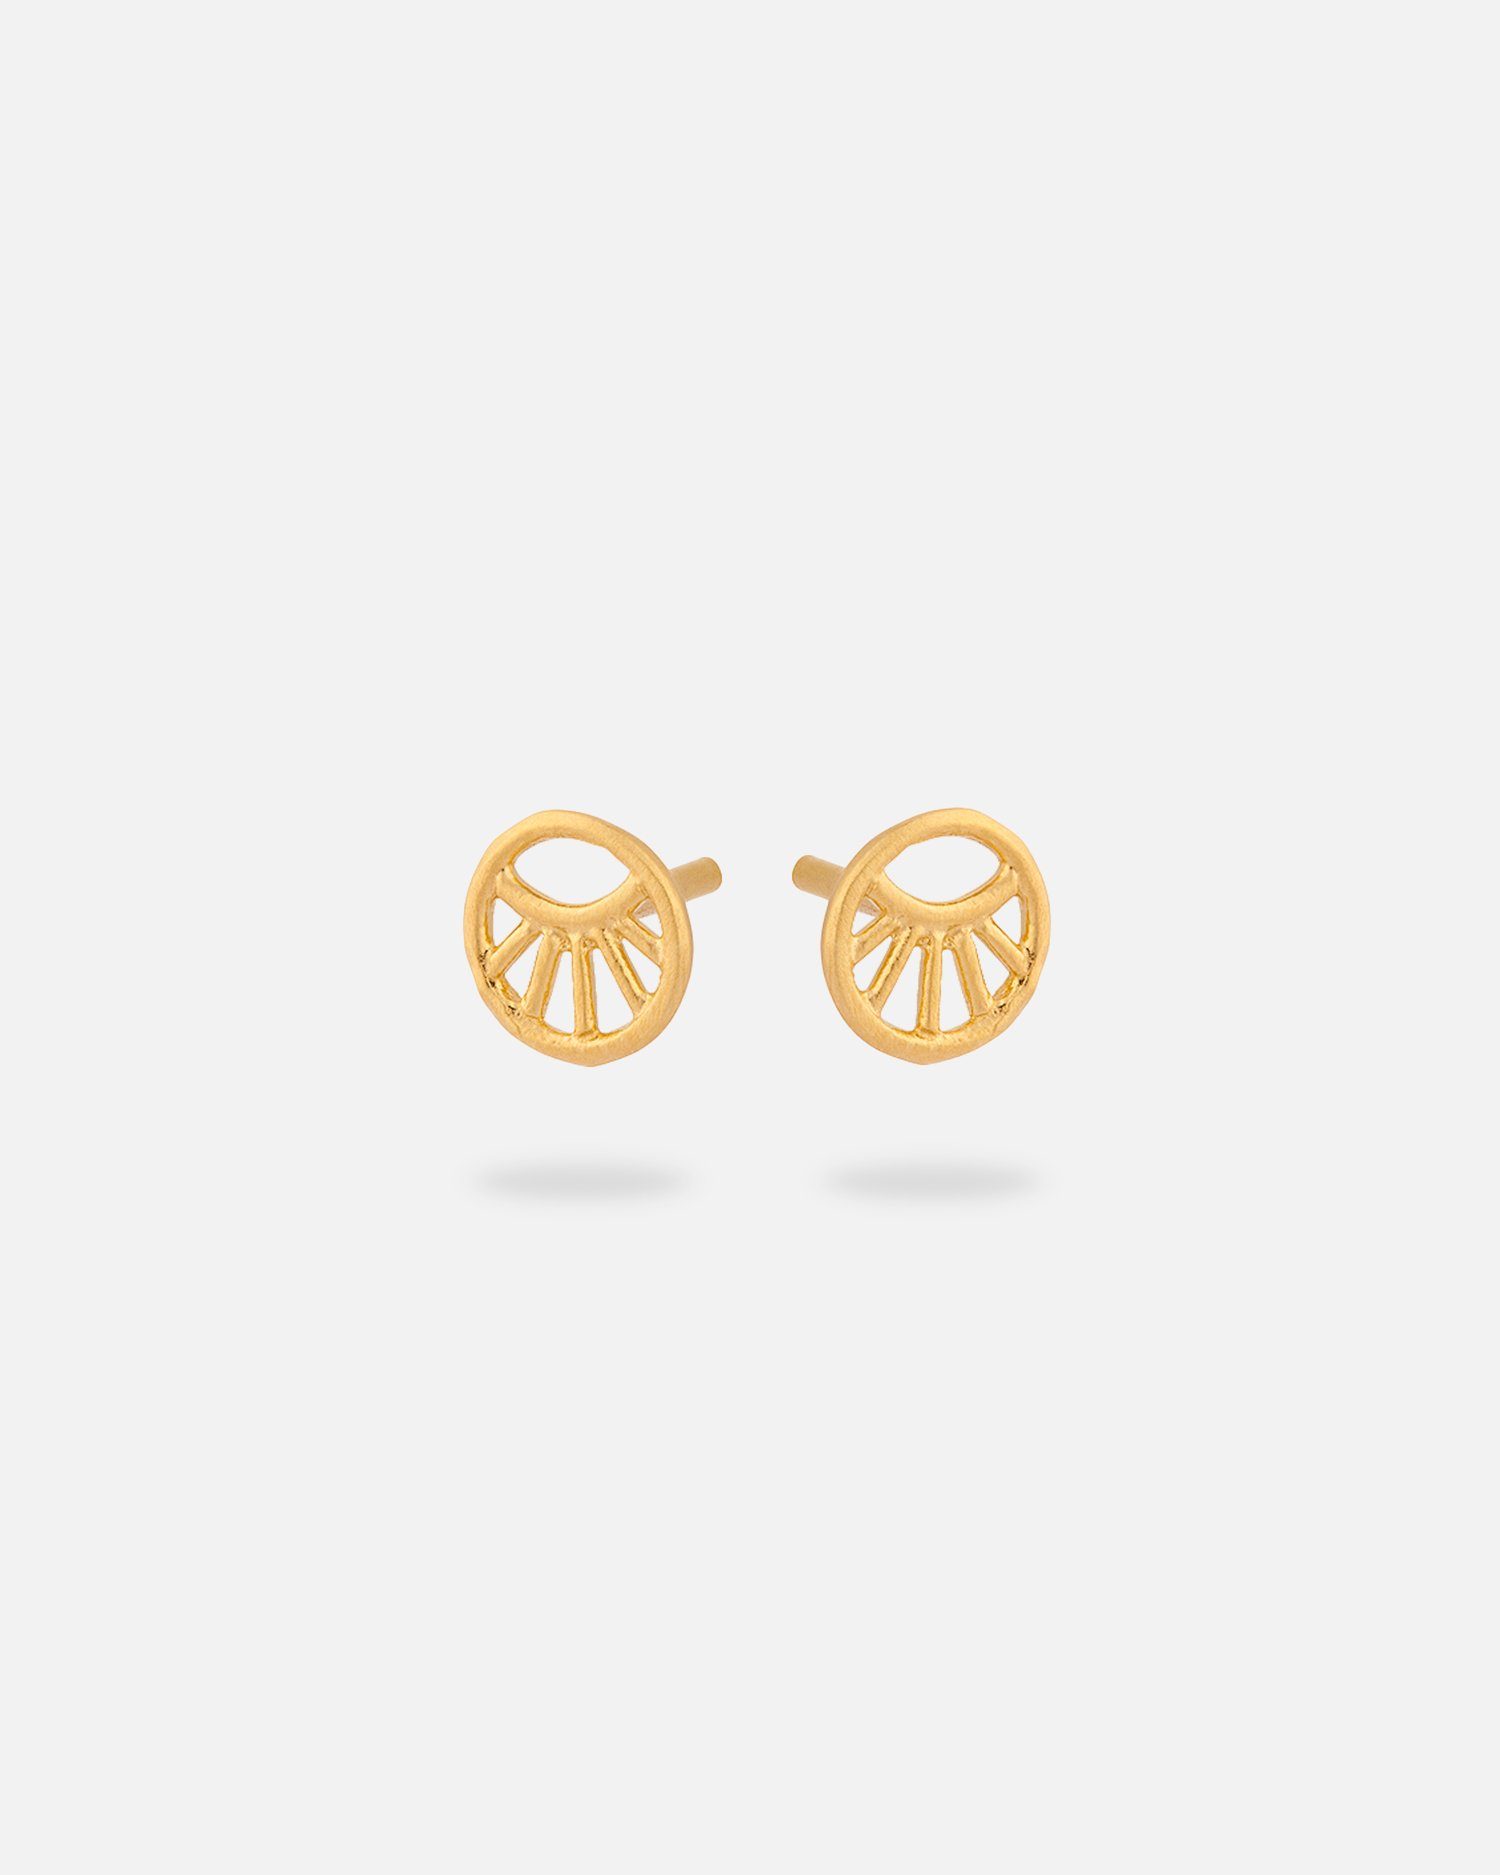 Pernille Corydon Paar Ohrstecker Mini Daylight Ohrringe Damen 0,6 cm, Silber 925, 18 Karat vergoldet